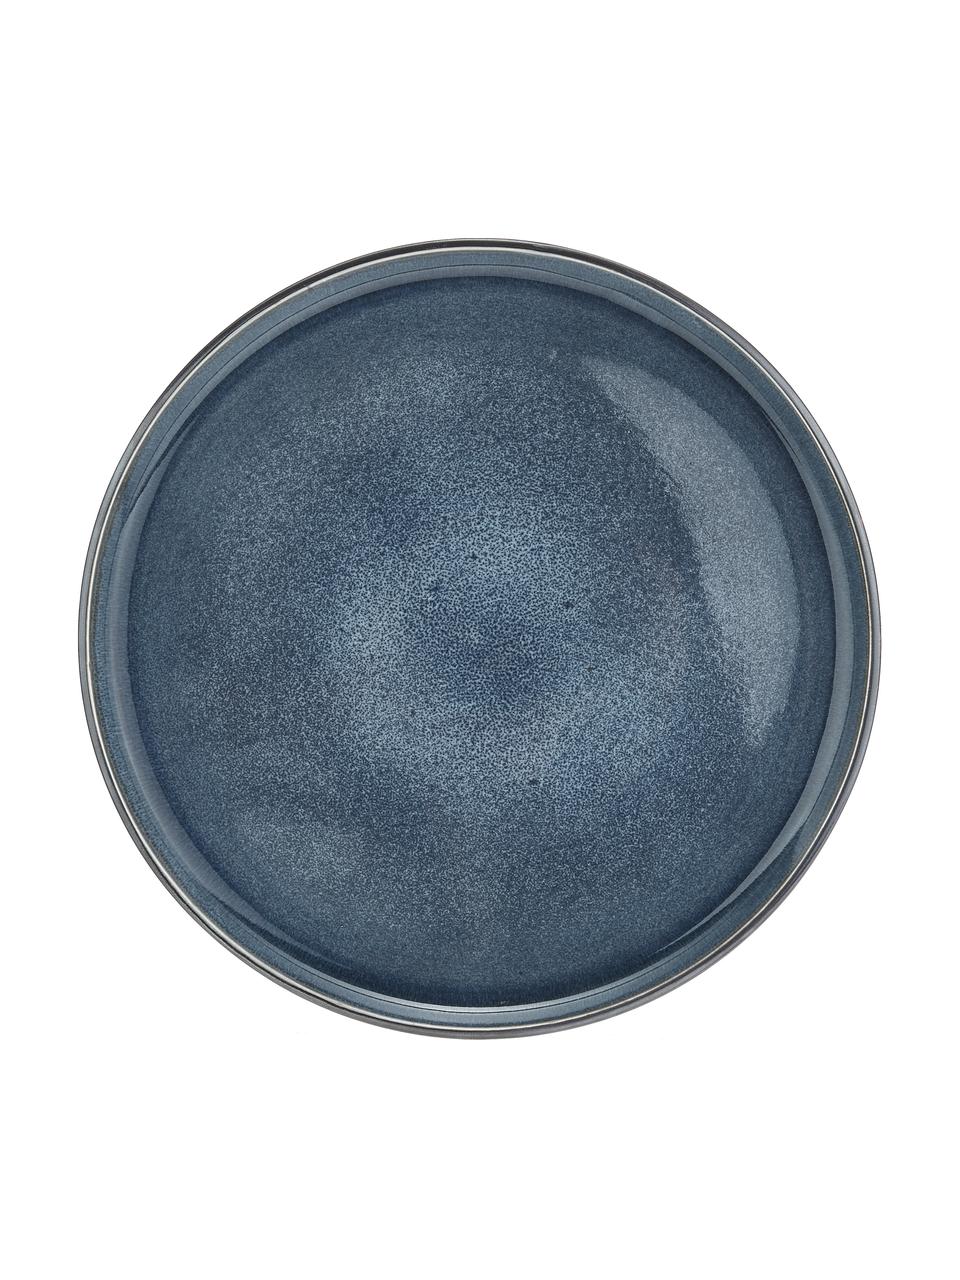 Ontbijtborden Quintana, 2 stuks, Porselein, Blauw, bruin, Ø 22 cm